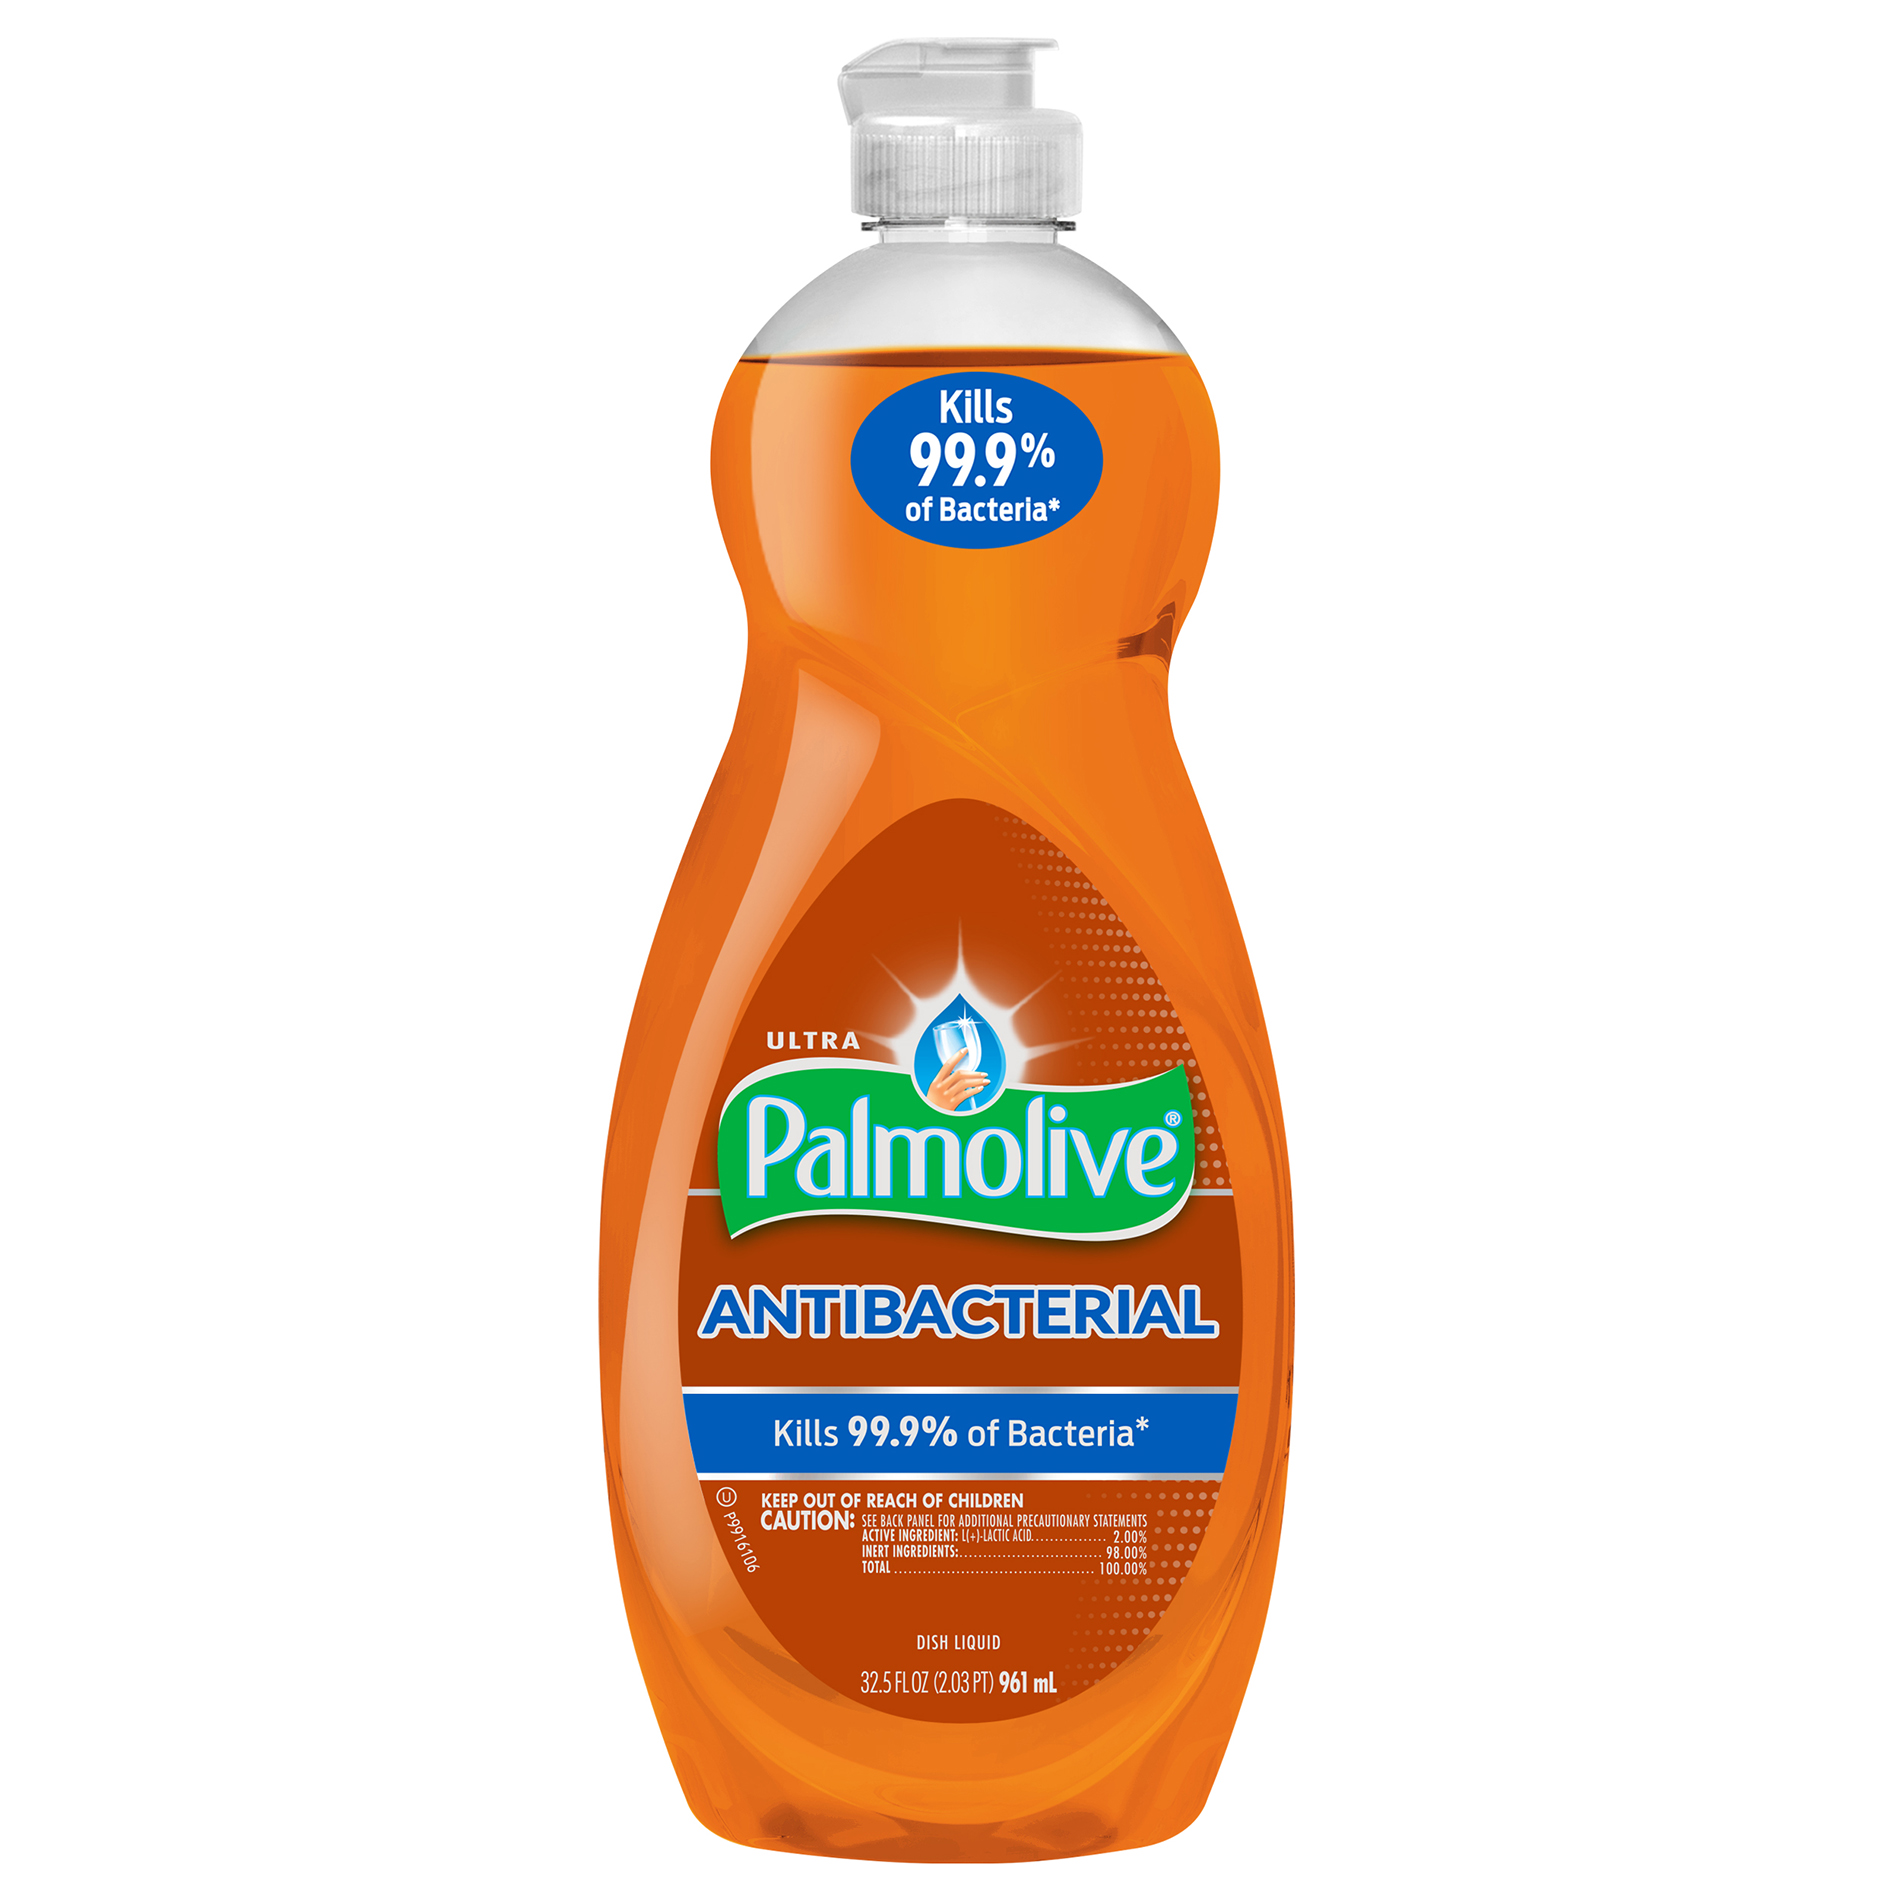 Palmolive Ultra Liquid Dish Soap, Antibacterial - 32.5 fluid ounce